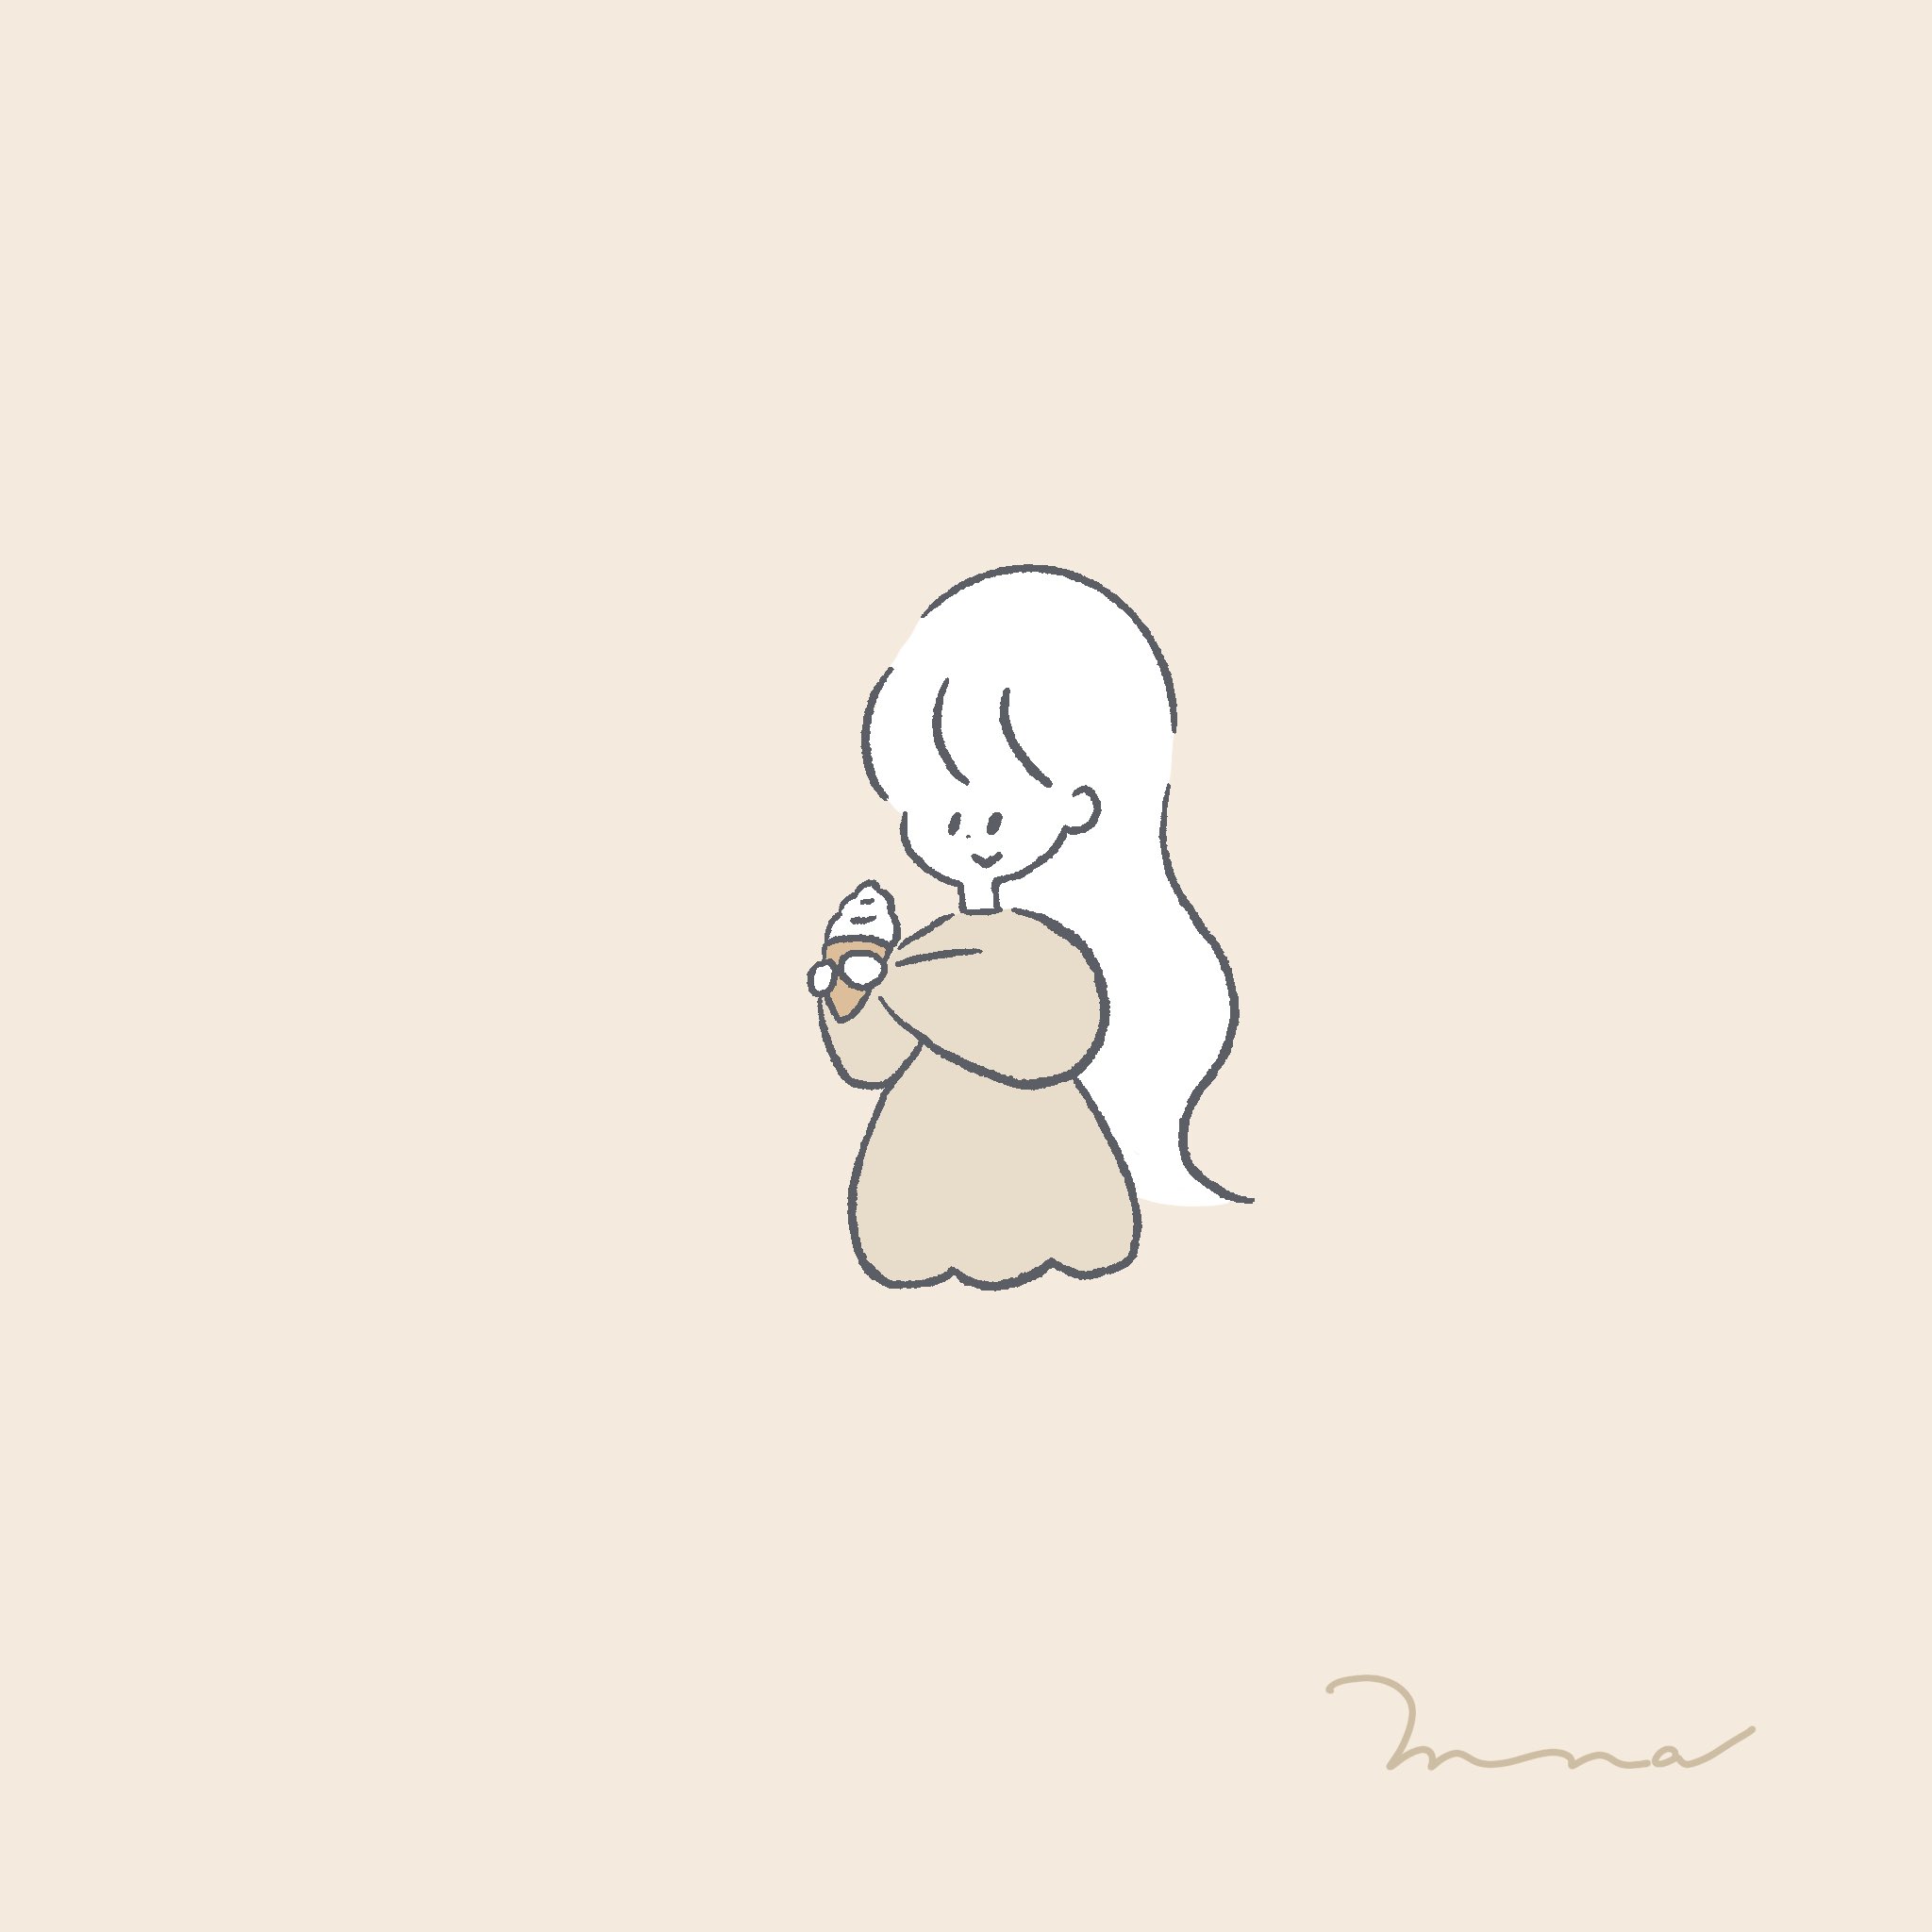 Twitter 上的 Miina ミイナ イラスト ソフトクリーム アイスクリーム アイス 女の子 ストーリー 壁紙 シンプルイラスト ゆるいイラスト イラスト 線画 絵描きさんと繋がりたい イラスト好きな人と繋がりたい 保育 保育イラスト 韓国